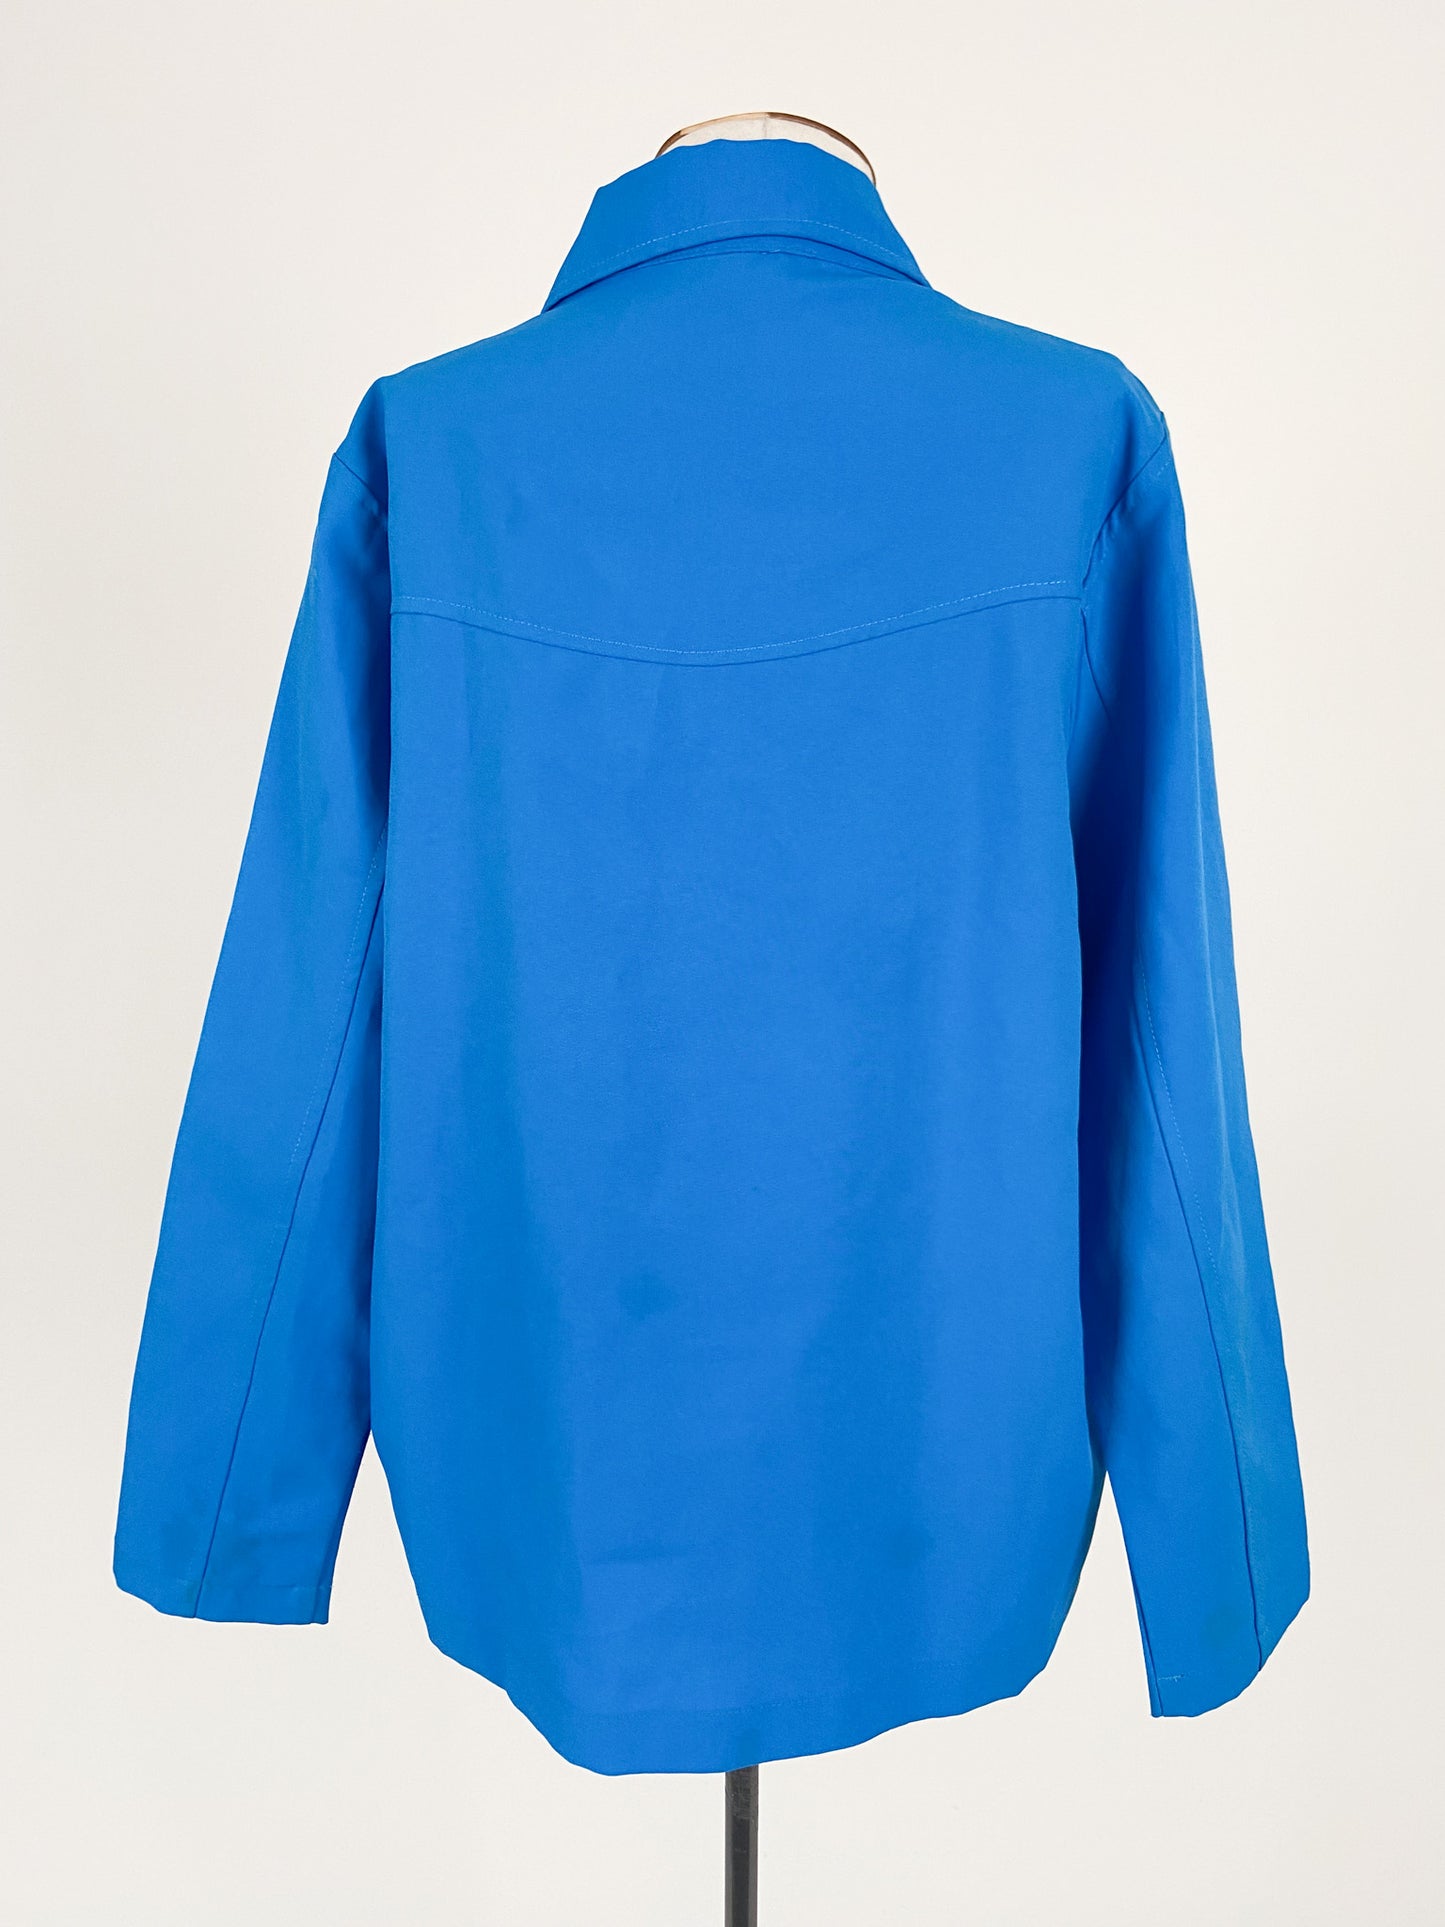 Mackenzie Ellen | Blue Workwear Top | Size M